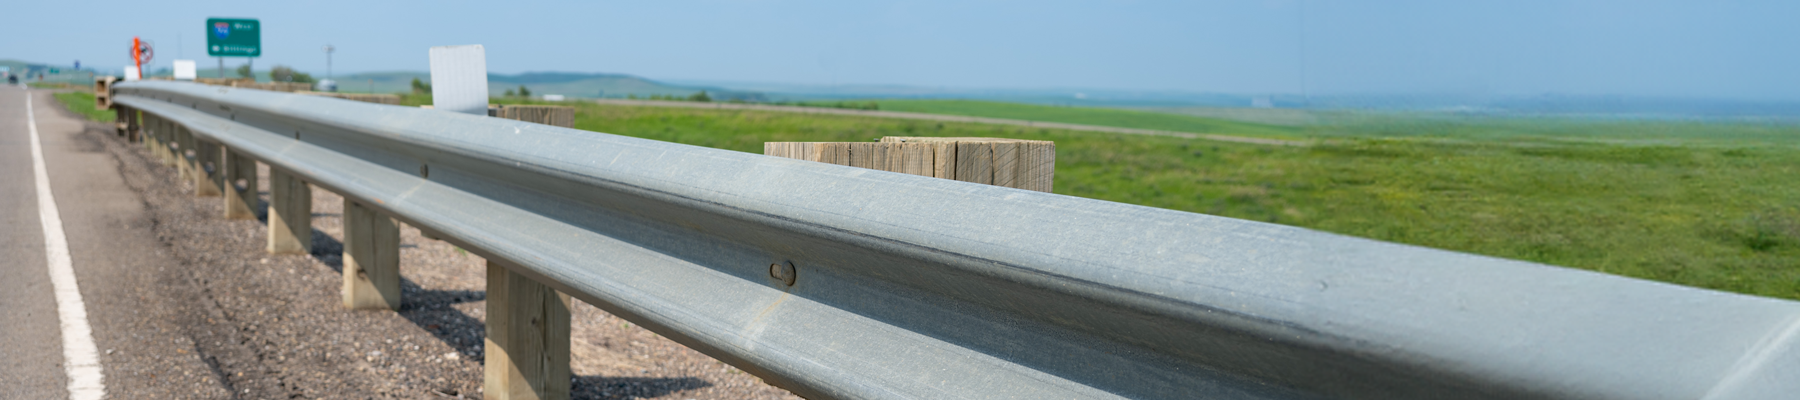 Guardrail on the side of Interstate 94 in North Dakota.